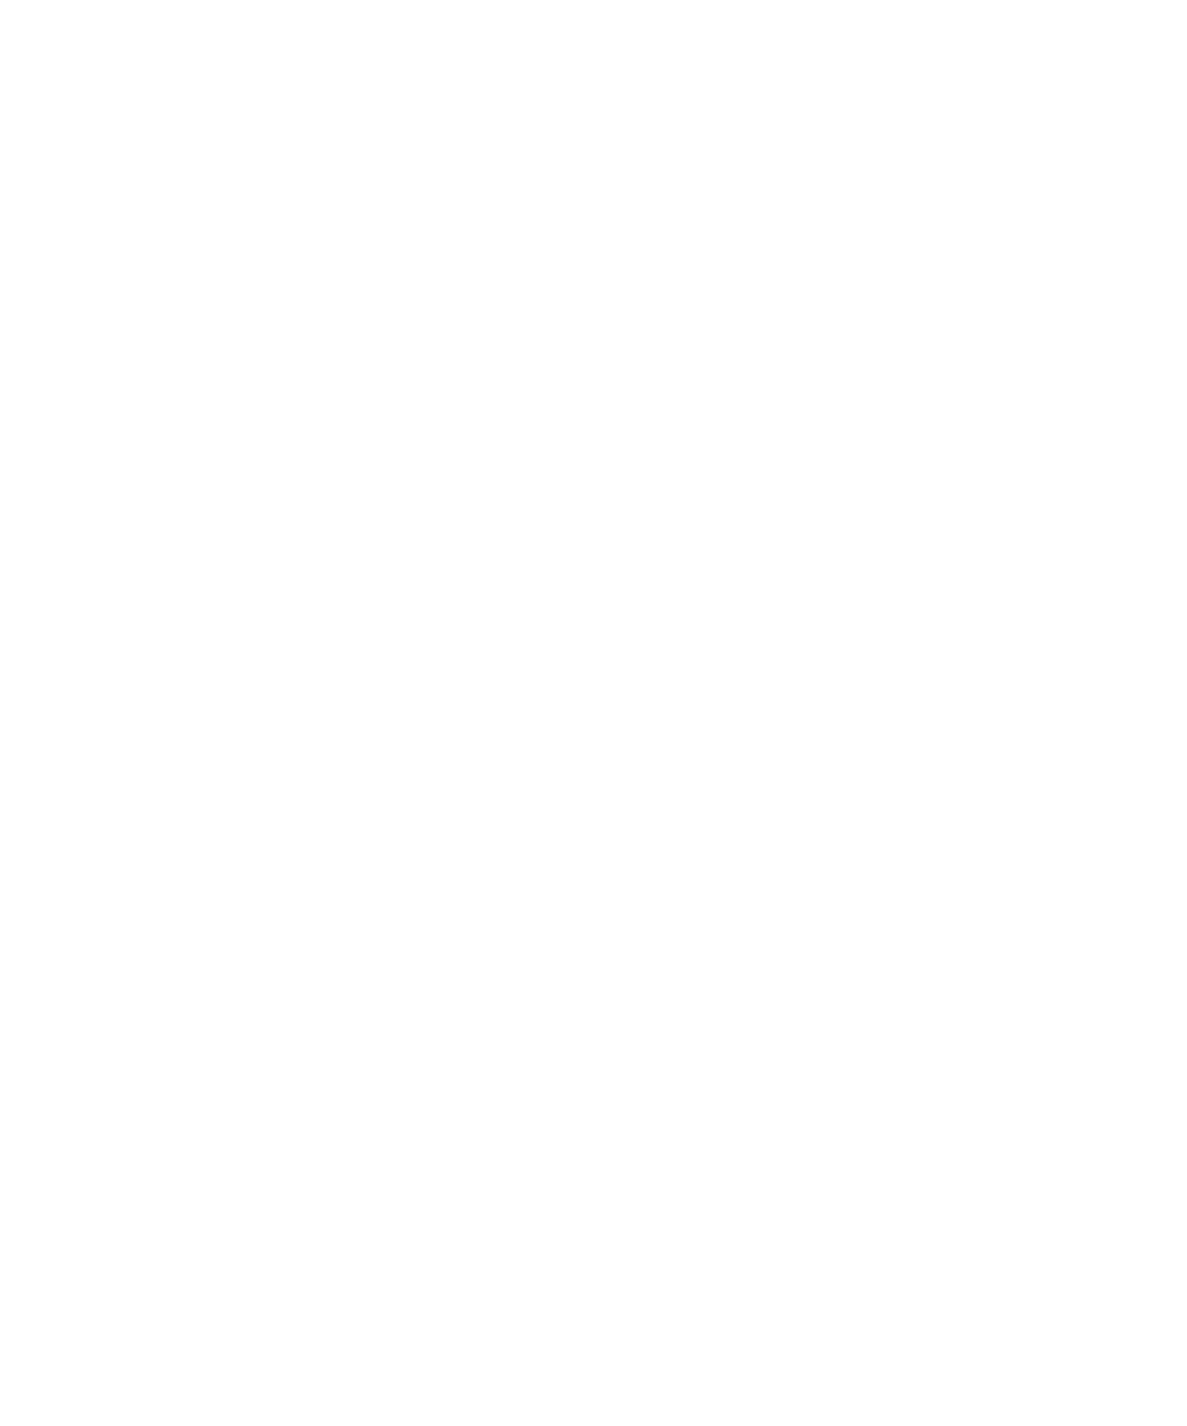 Cleanaway Waste Management logo pour fonds sombres (PNG transparent)